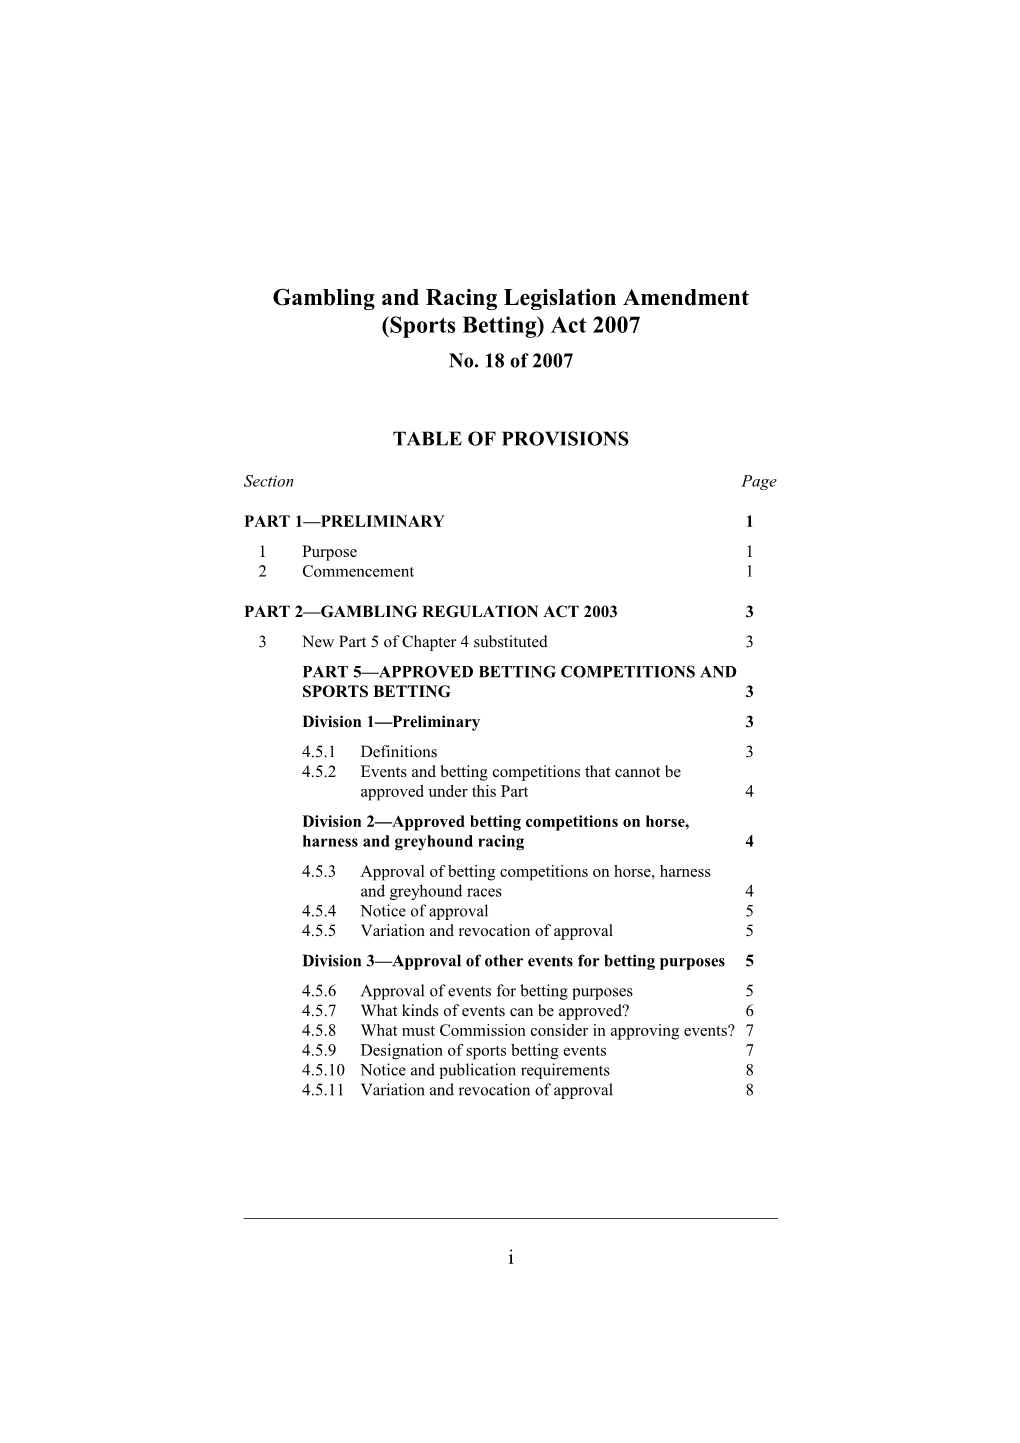 Gambling and Racing Legislation Amendment (Sports Betting) Act 2007